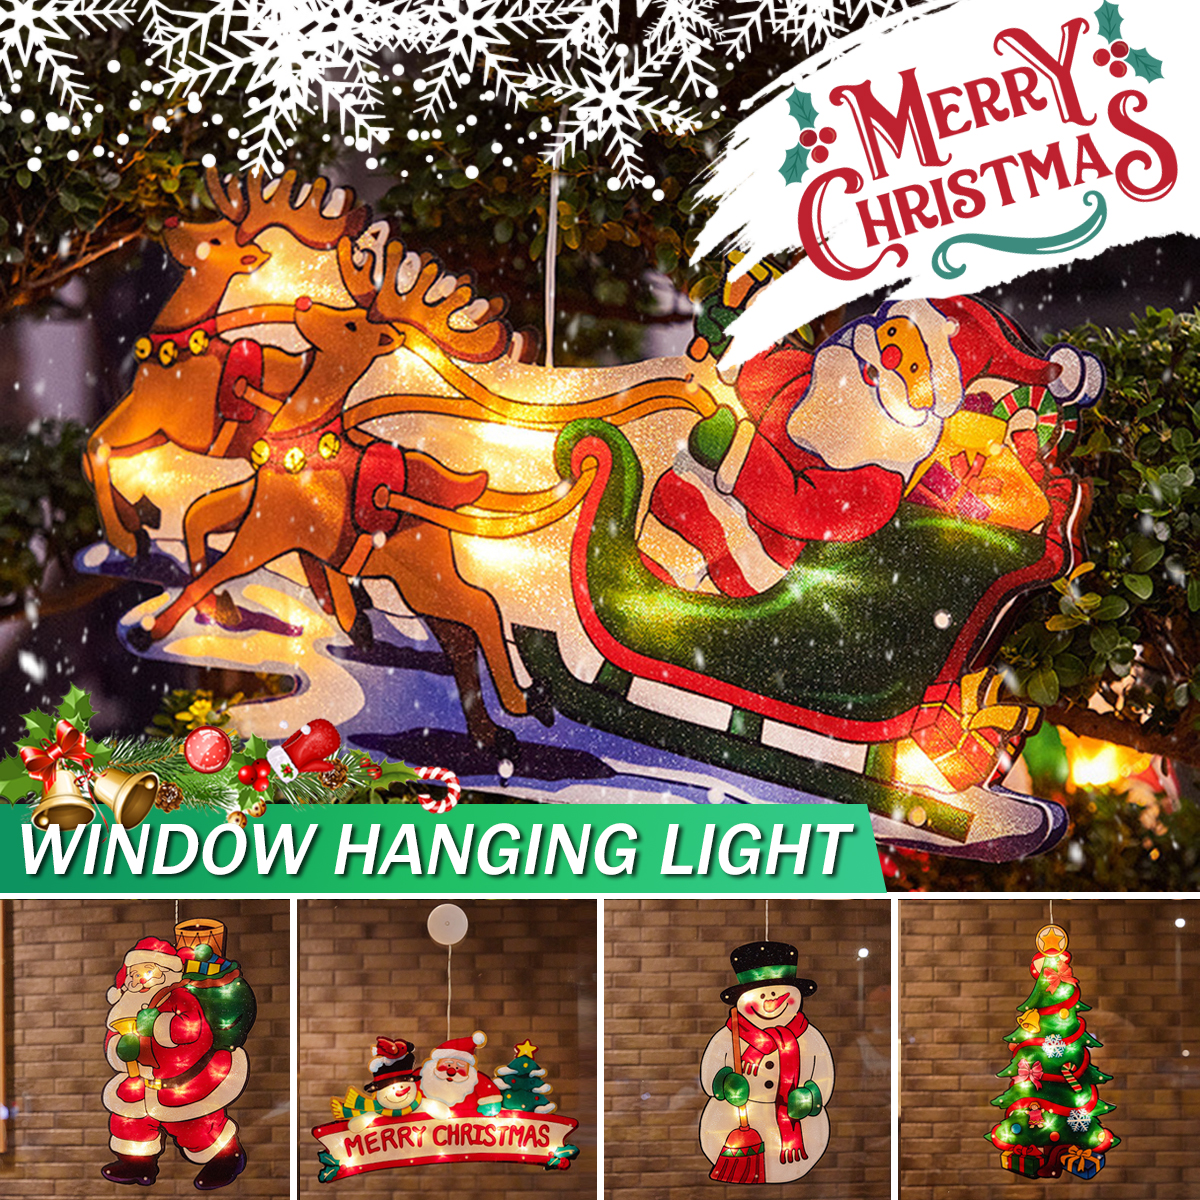 Details about   Santa Claus Snowman Tree Merry Christmas Window Hanging LED Light Home De 